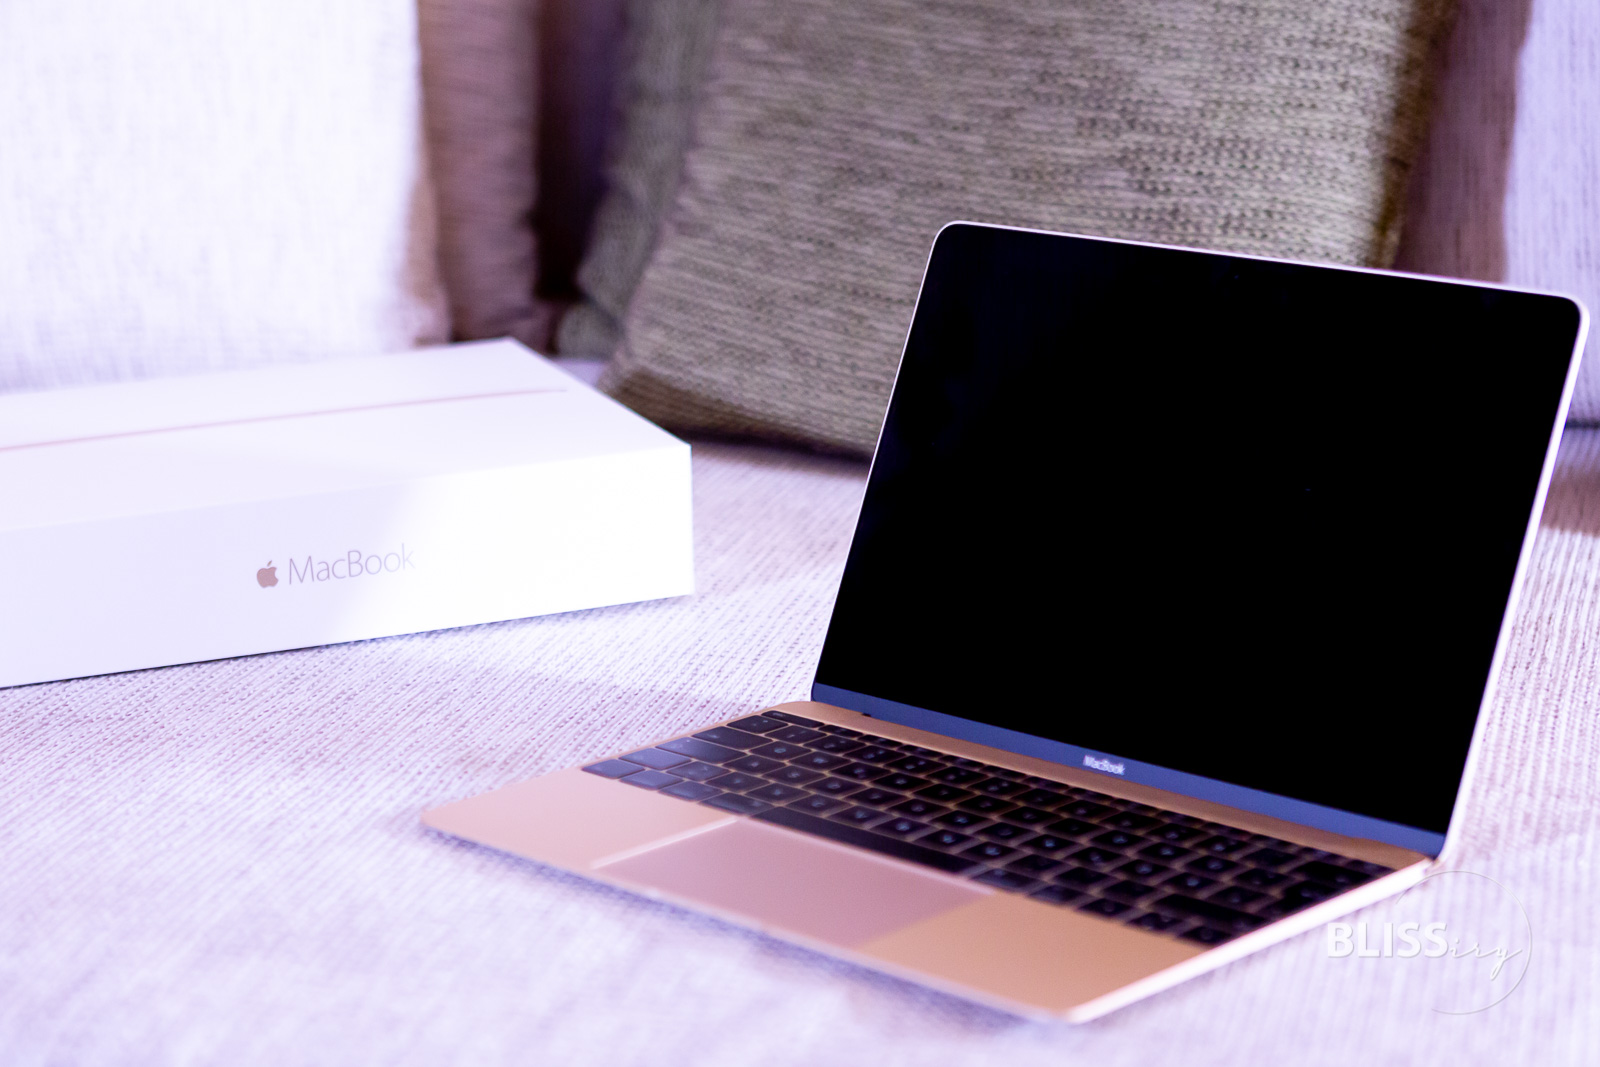 MacBook oder MacBook Air kaufen - Entscheidungshilfe - Apple MacBook Laptop - Gold, Rosegold, Silber, Spacegrau - Bewertung Notebook - 12Zoll - Technikblog, Lifestyleblogger